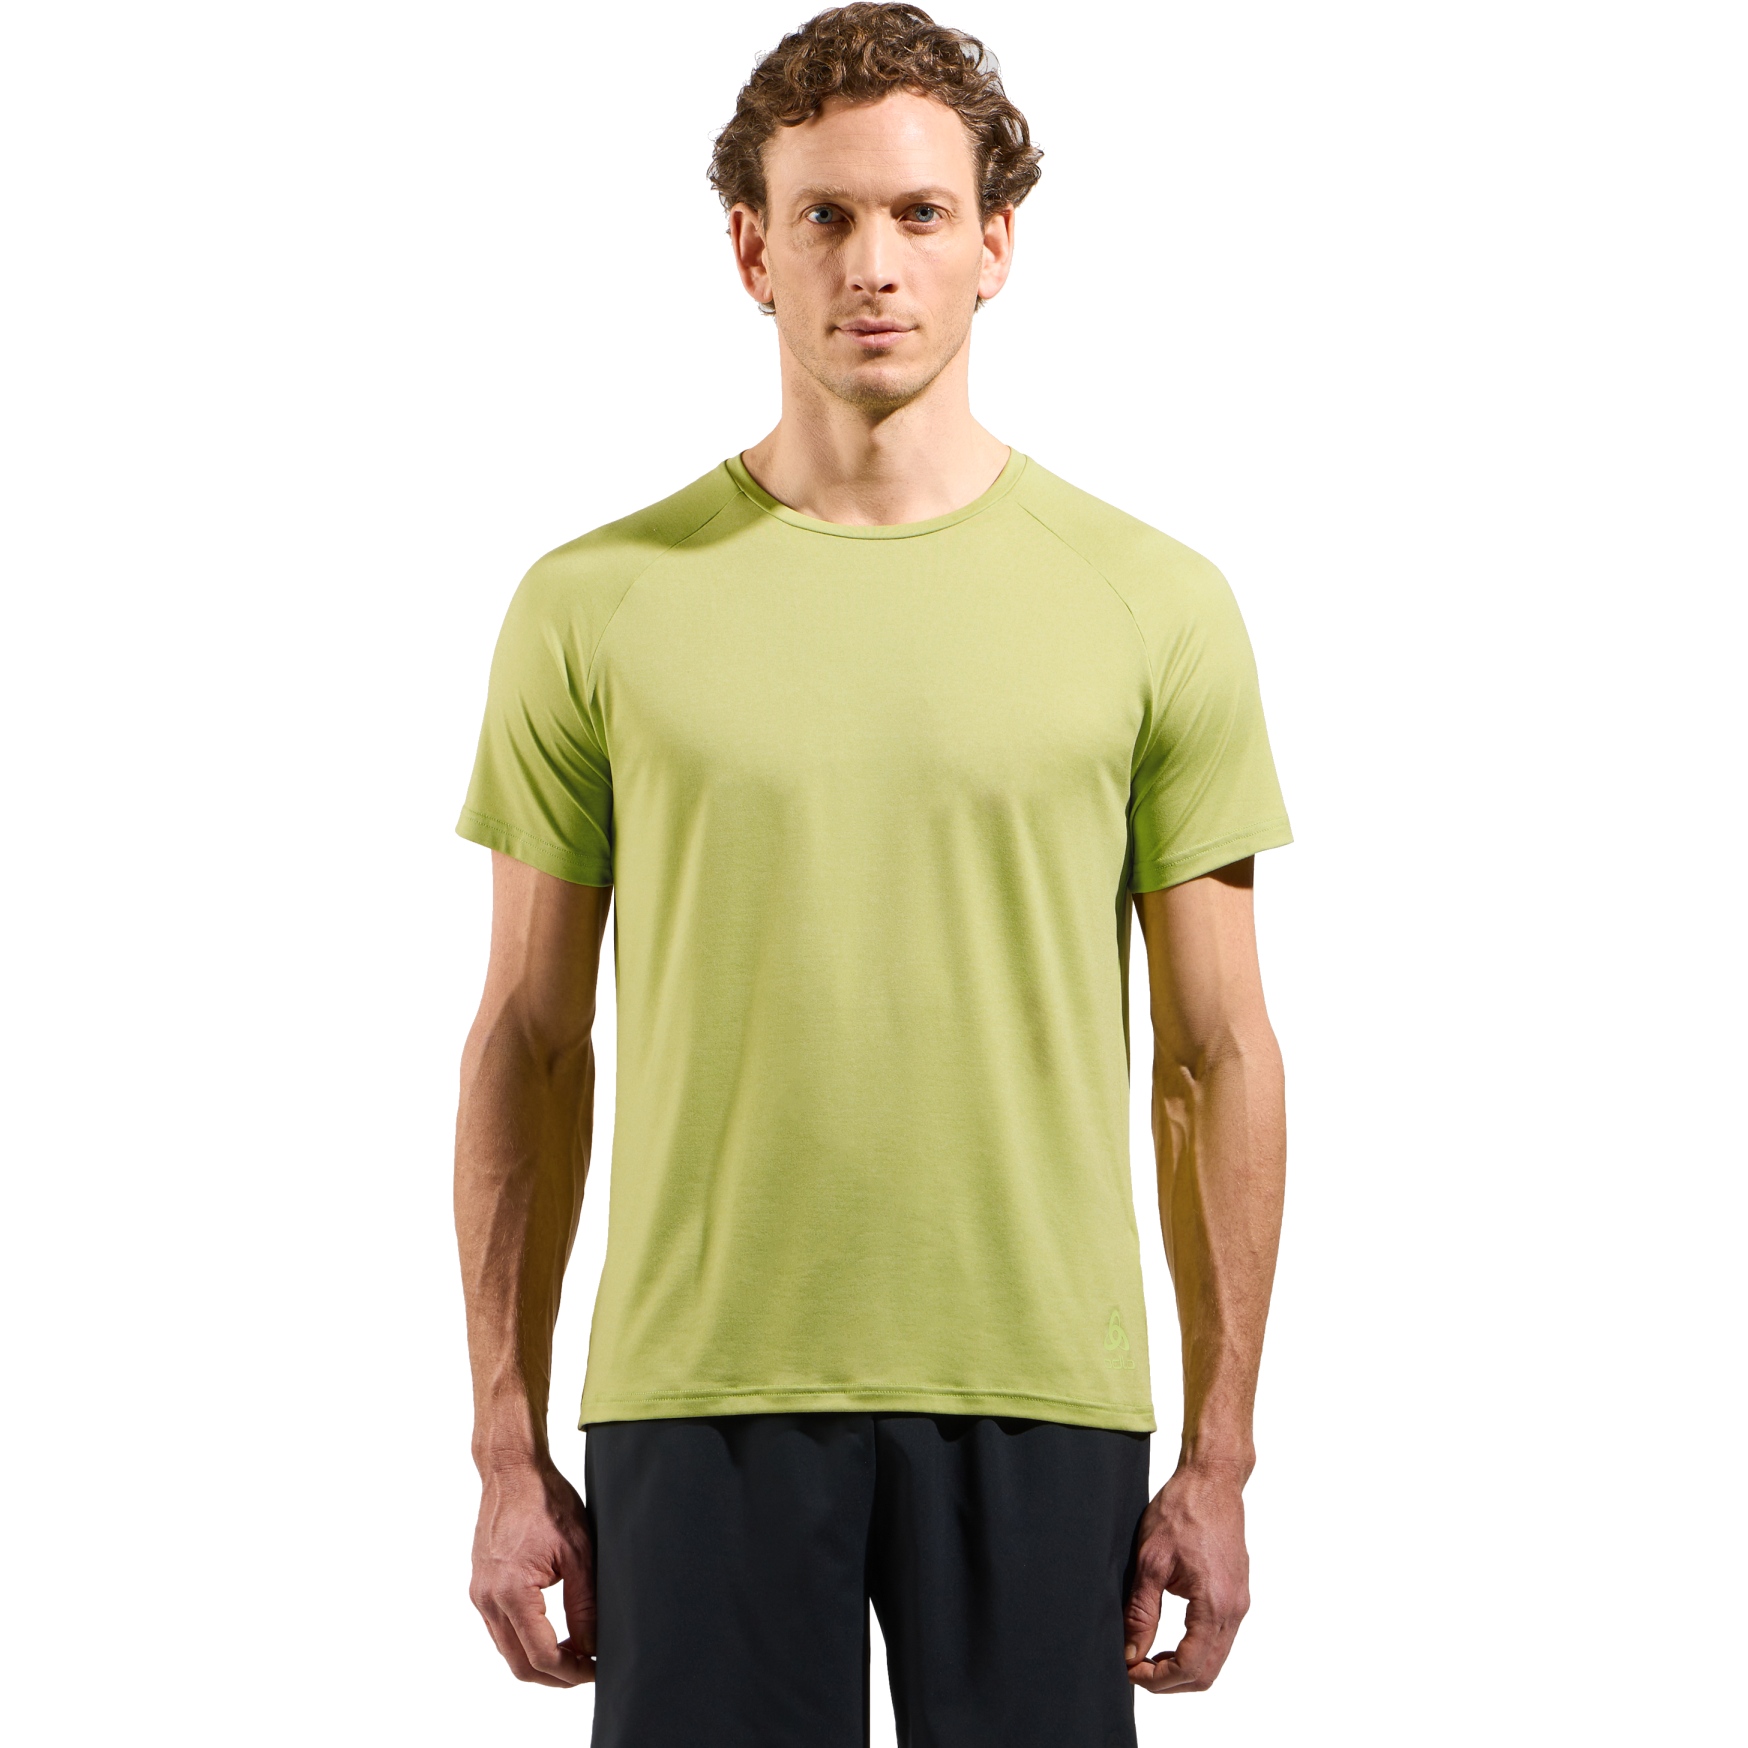 Produktbild von Odlo Active 365 T-Shirt Herren - sharp green melange